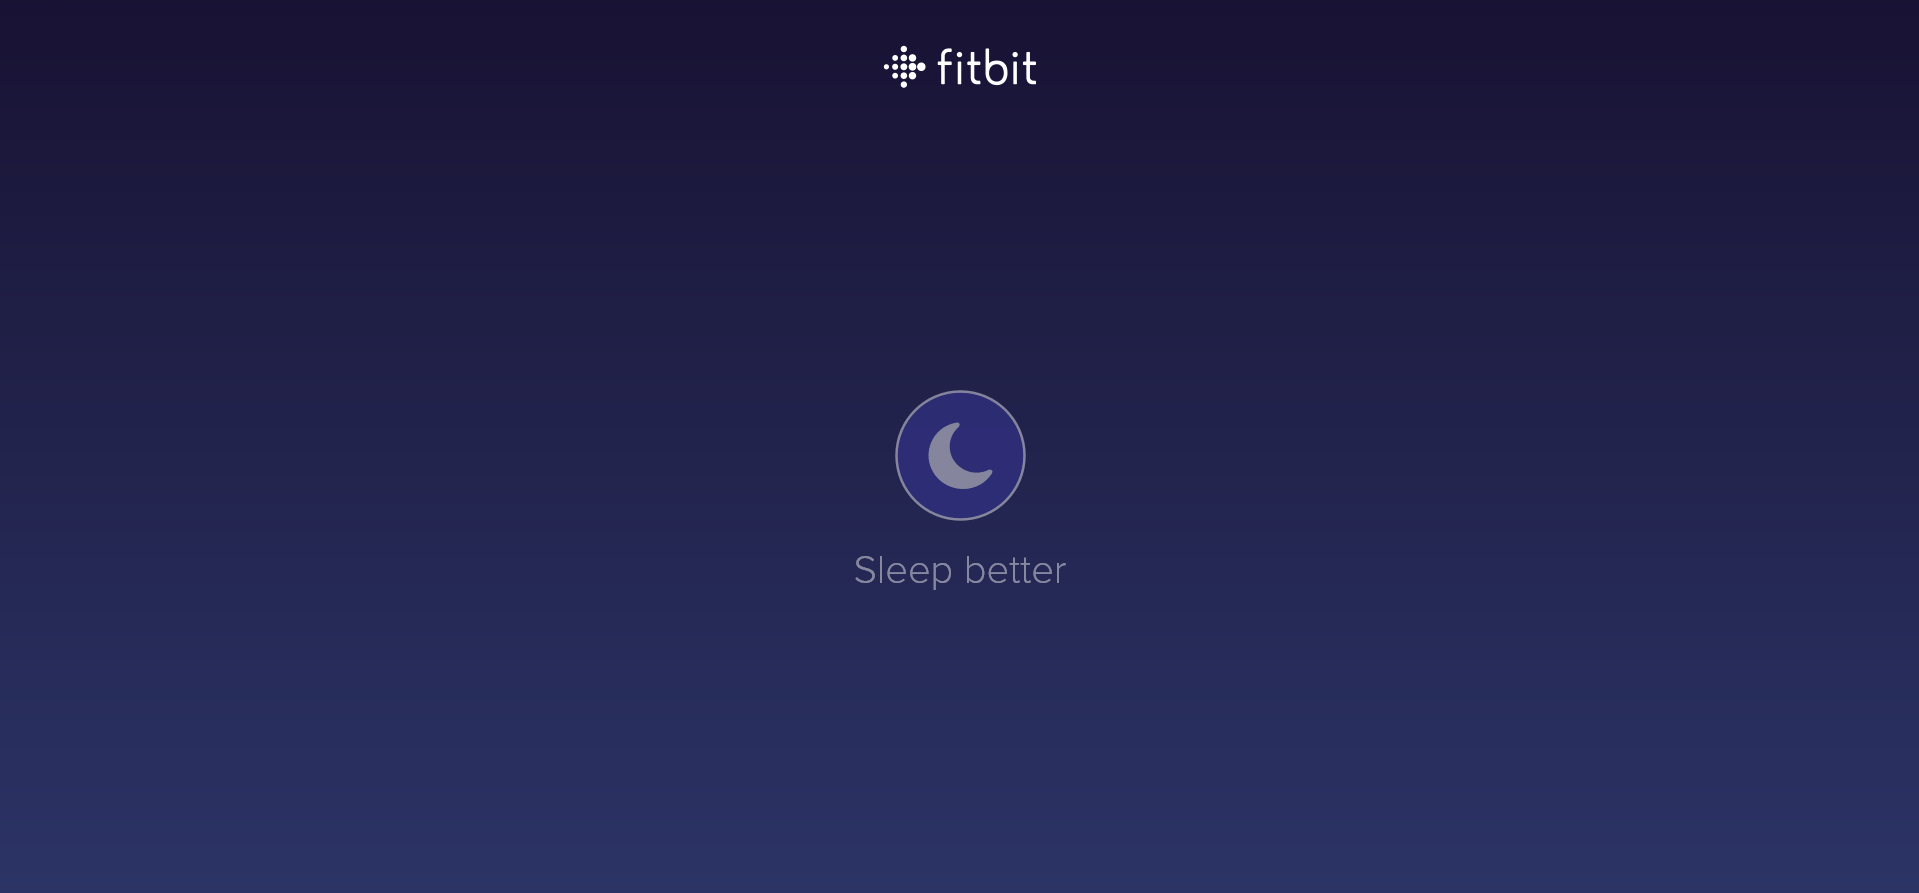 Fitbit adds "Sleep Schedule" feature to Windows phone app - OnMSFT.com - June 20, 2016